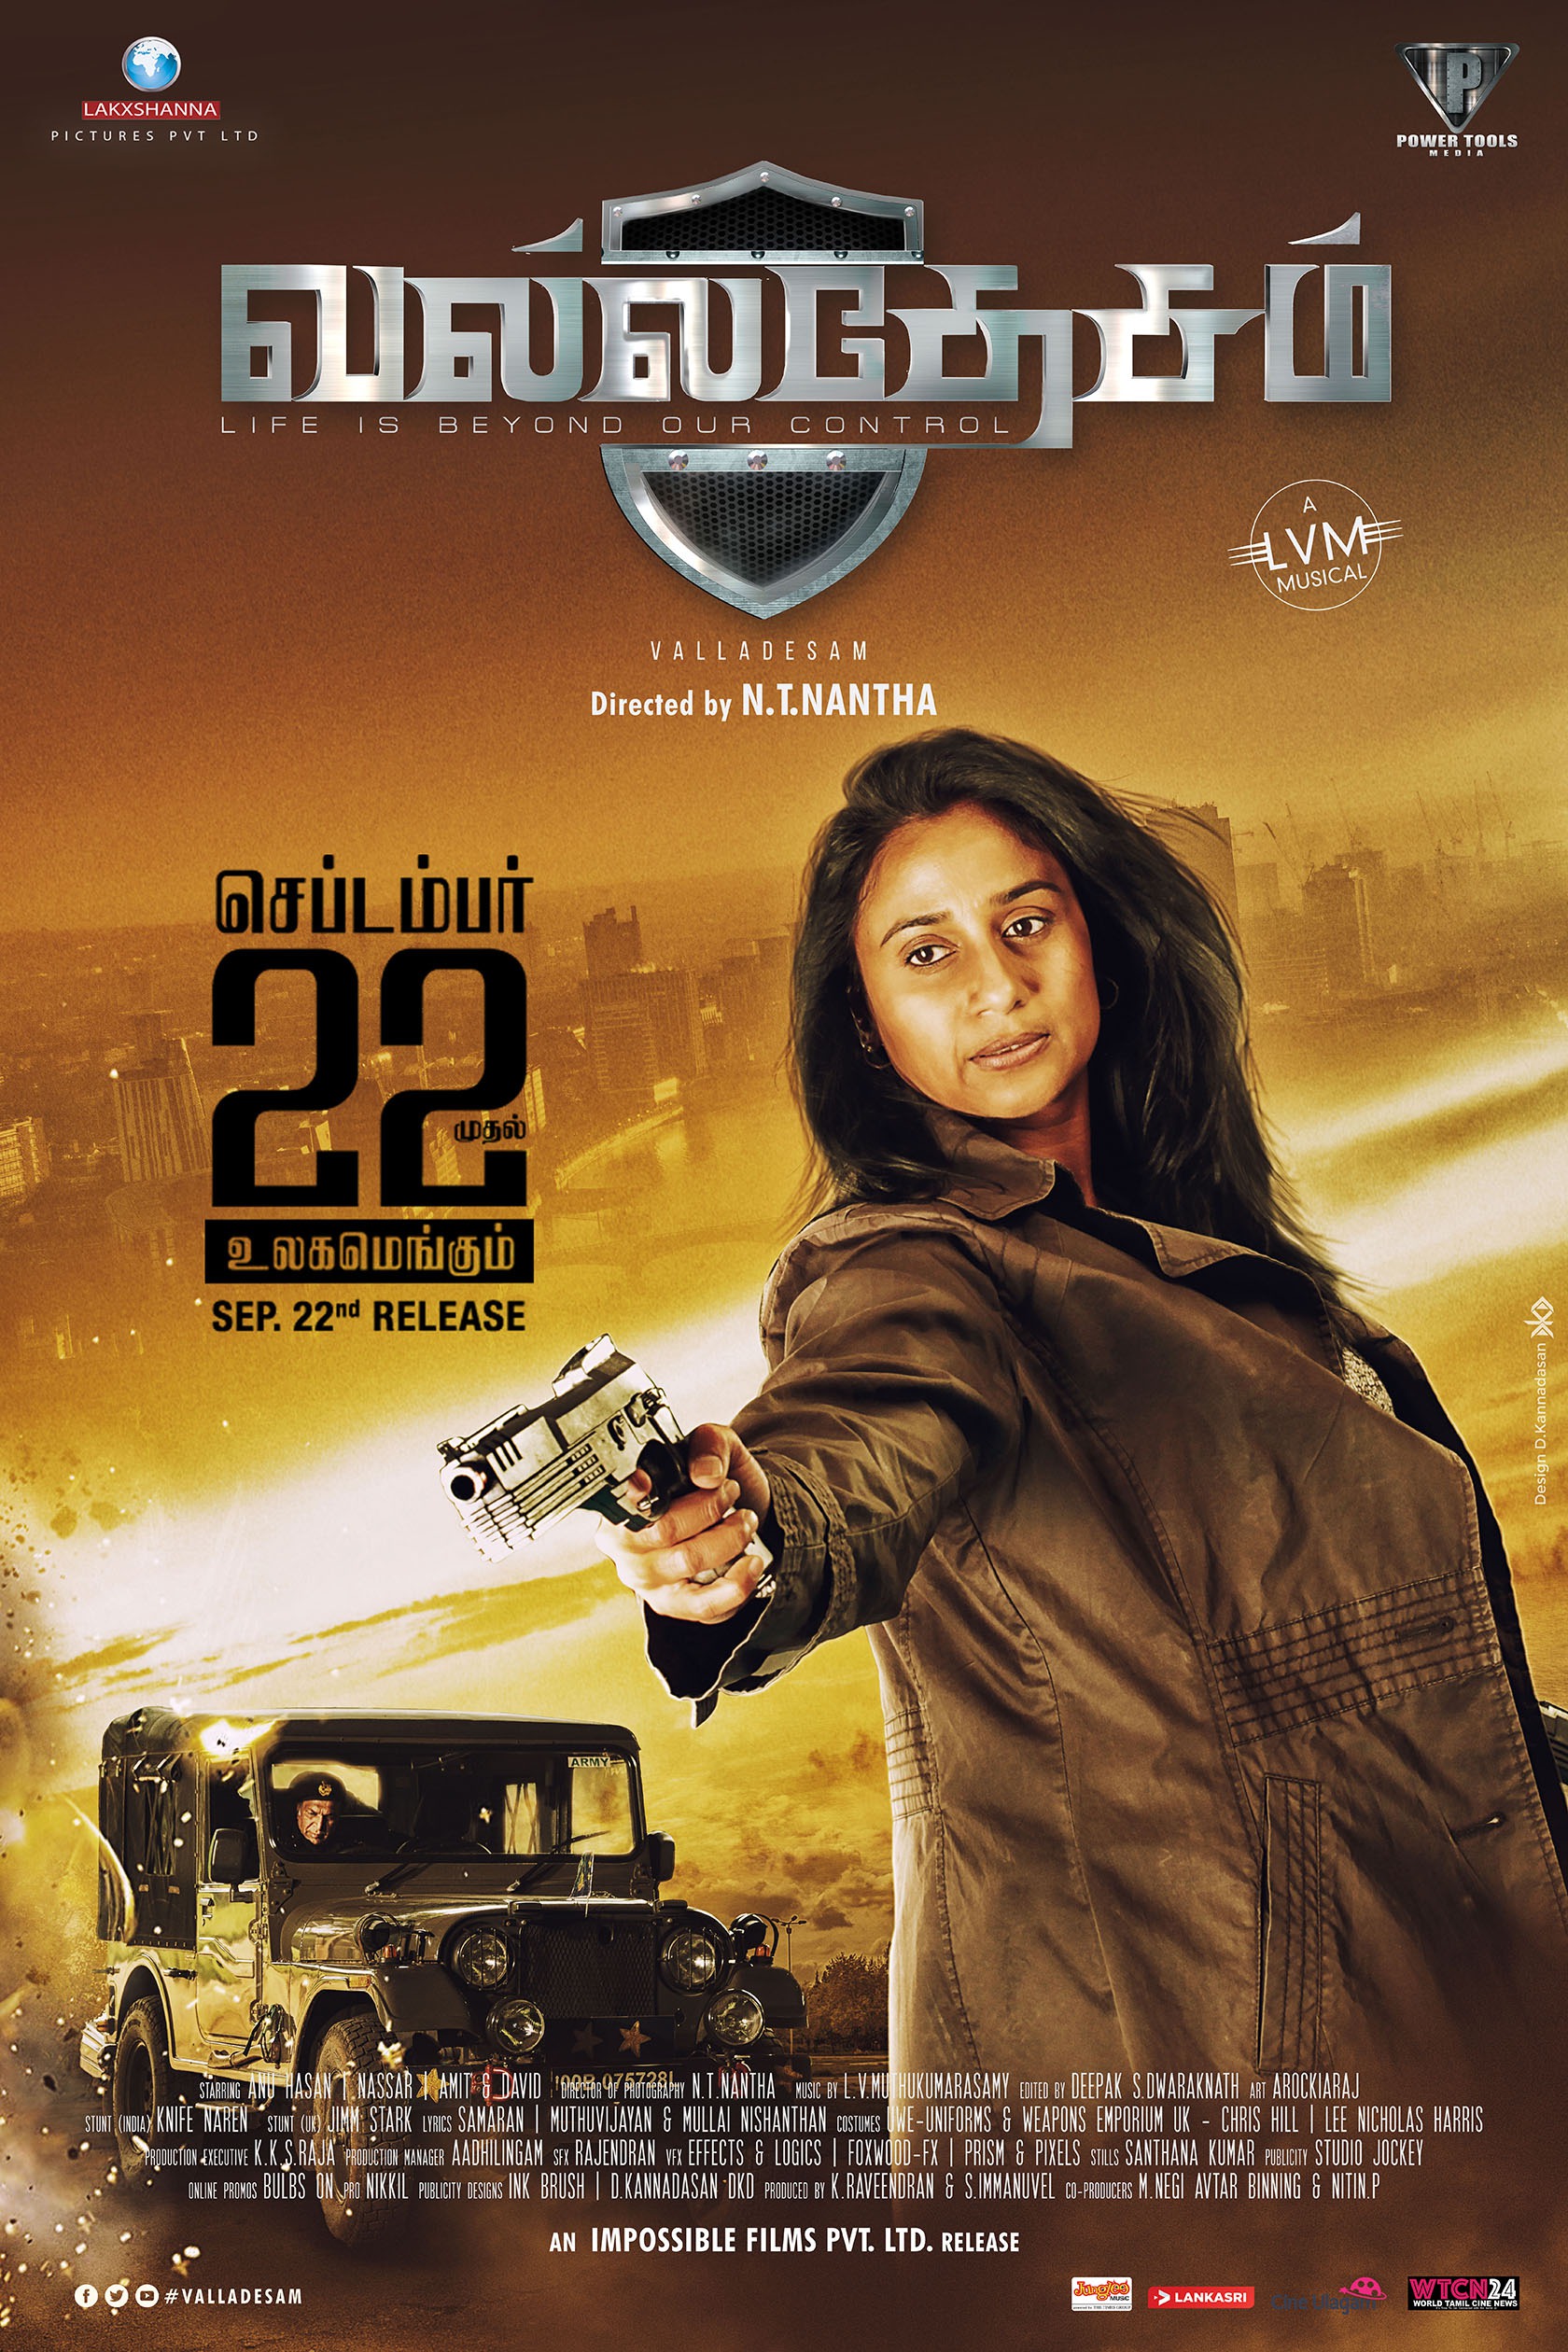 Mega Sized Movie Poster Image for Valladesam (#3 of 3)